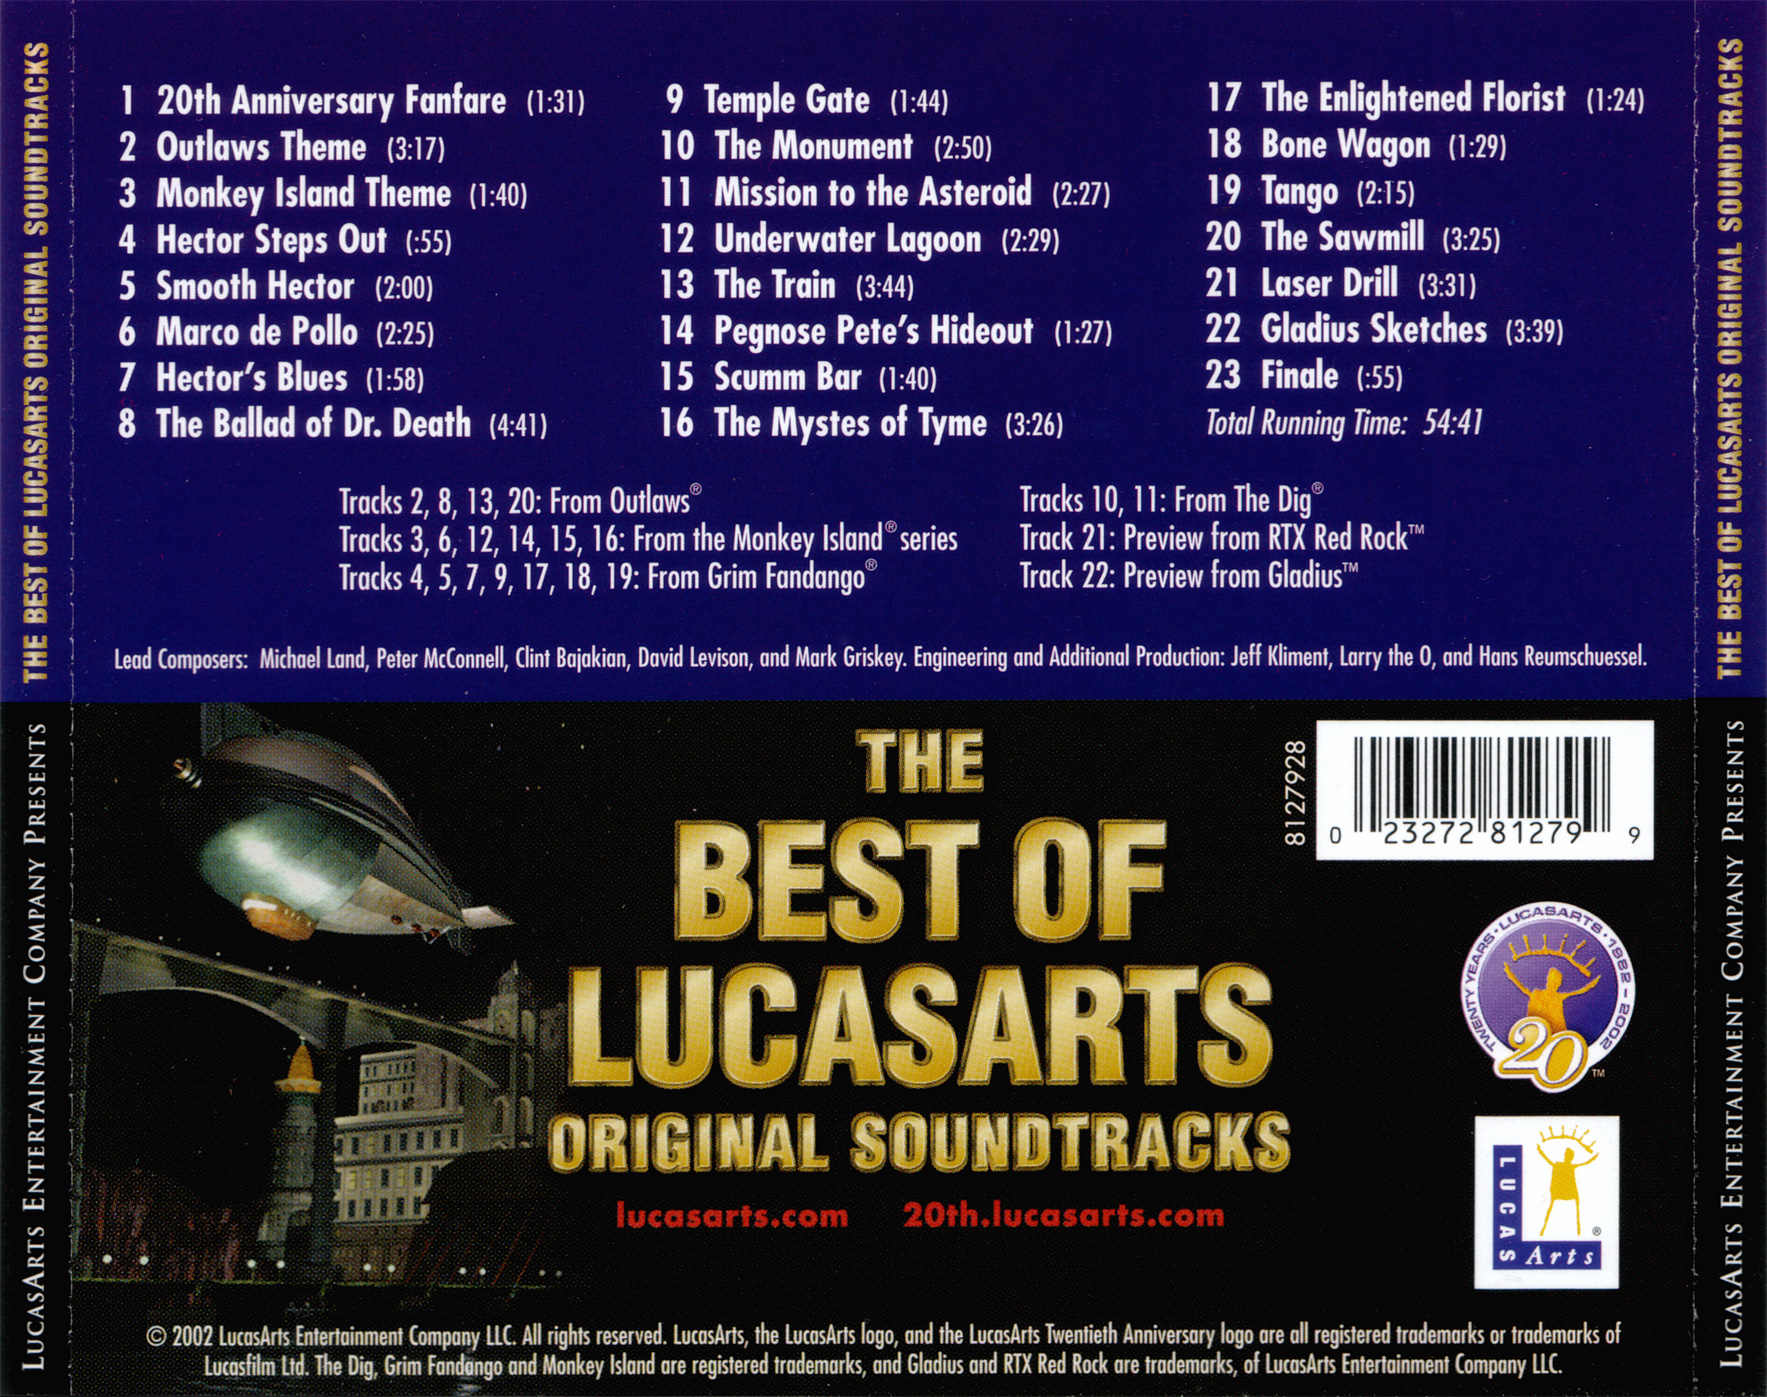 The Best Of Lucasarts Original Soundtracks 2002 - 00-The_Best_of_Lucasarts_Original_Soundtracks-2002-Back.jpg